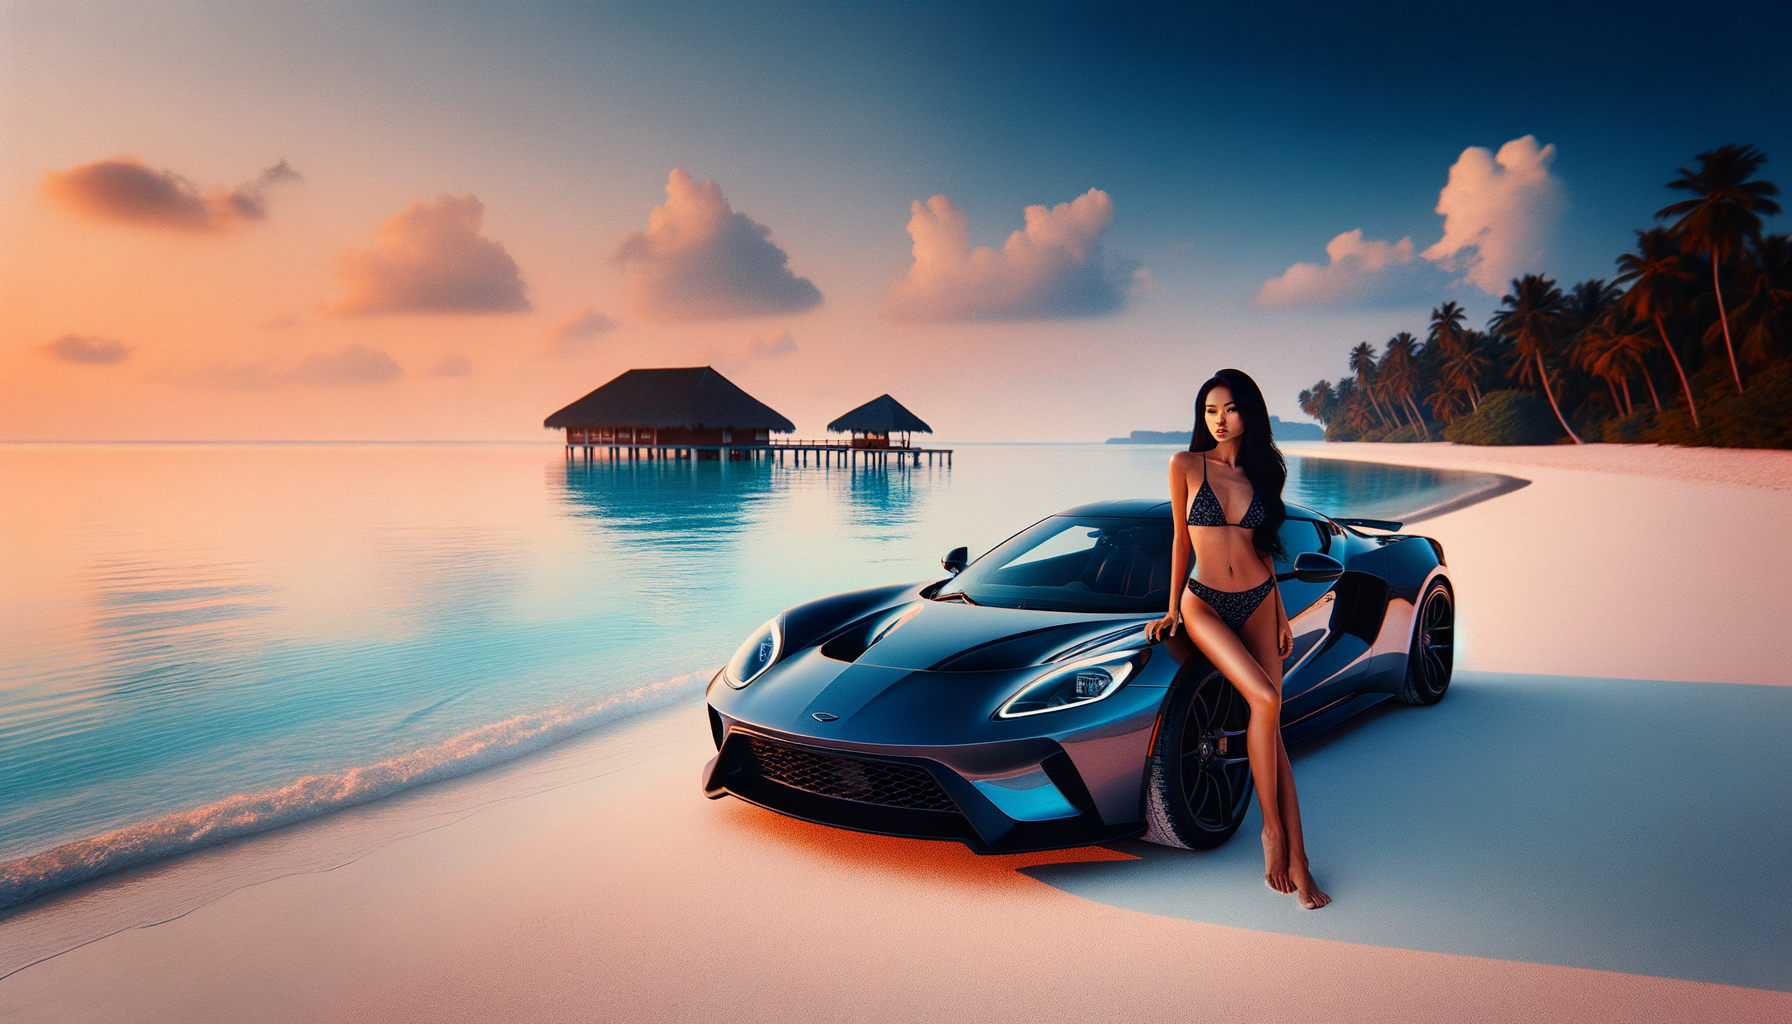 A beautiful Asia girl in bikini leans against a sports car on the beach